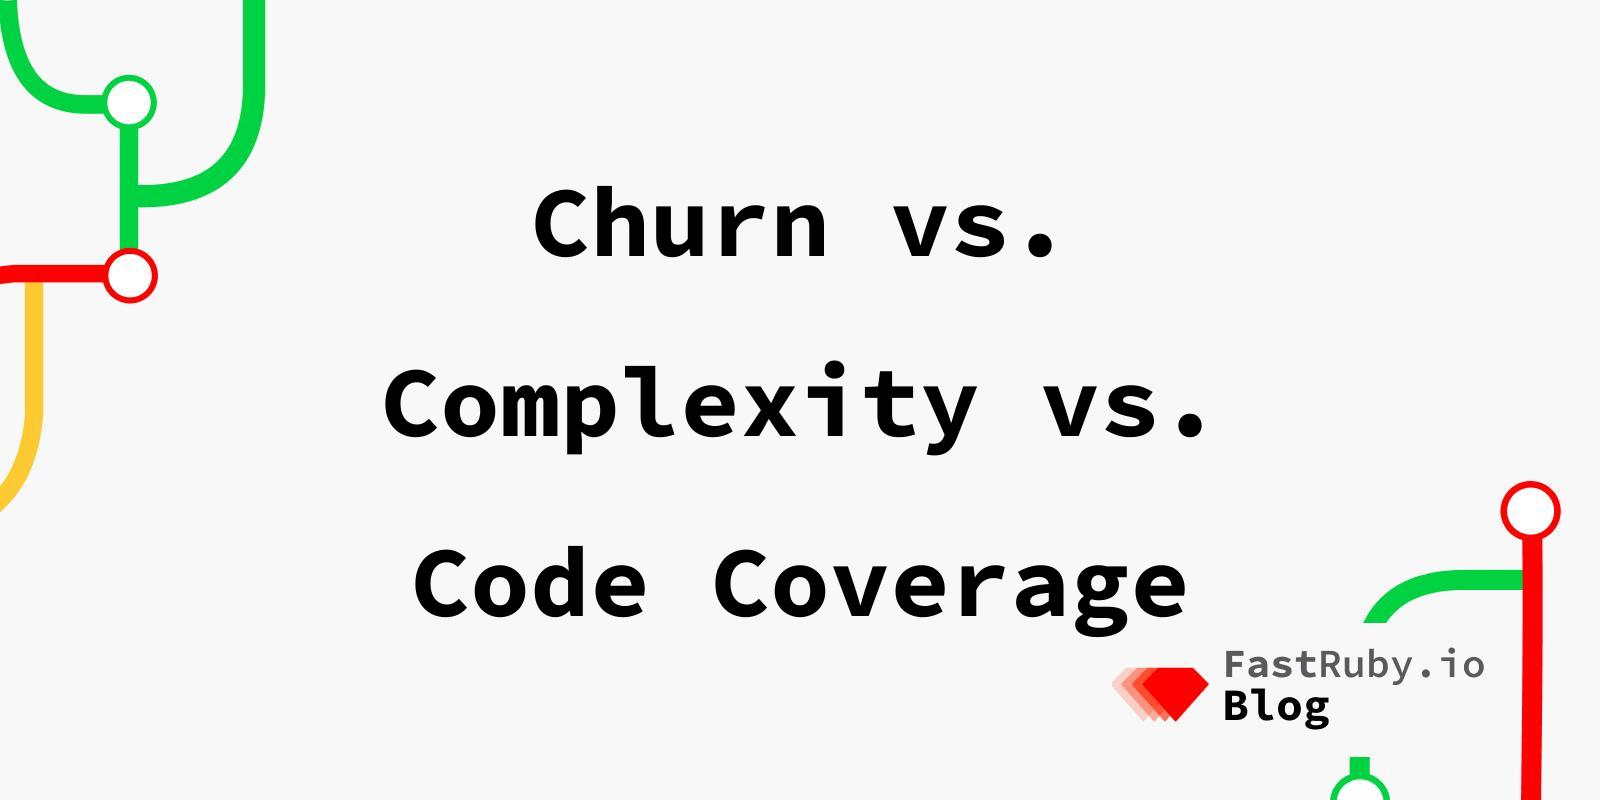 Churn vs. Complexity vs. Code Coverage